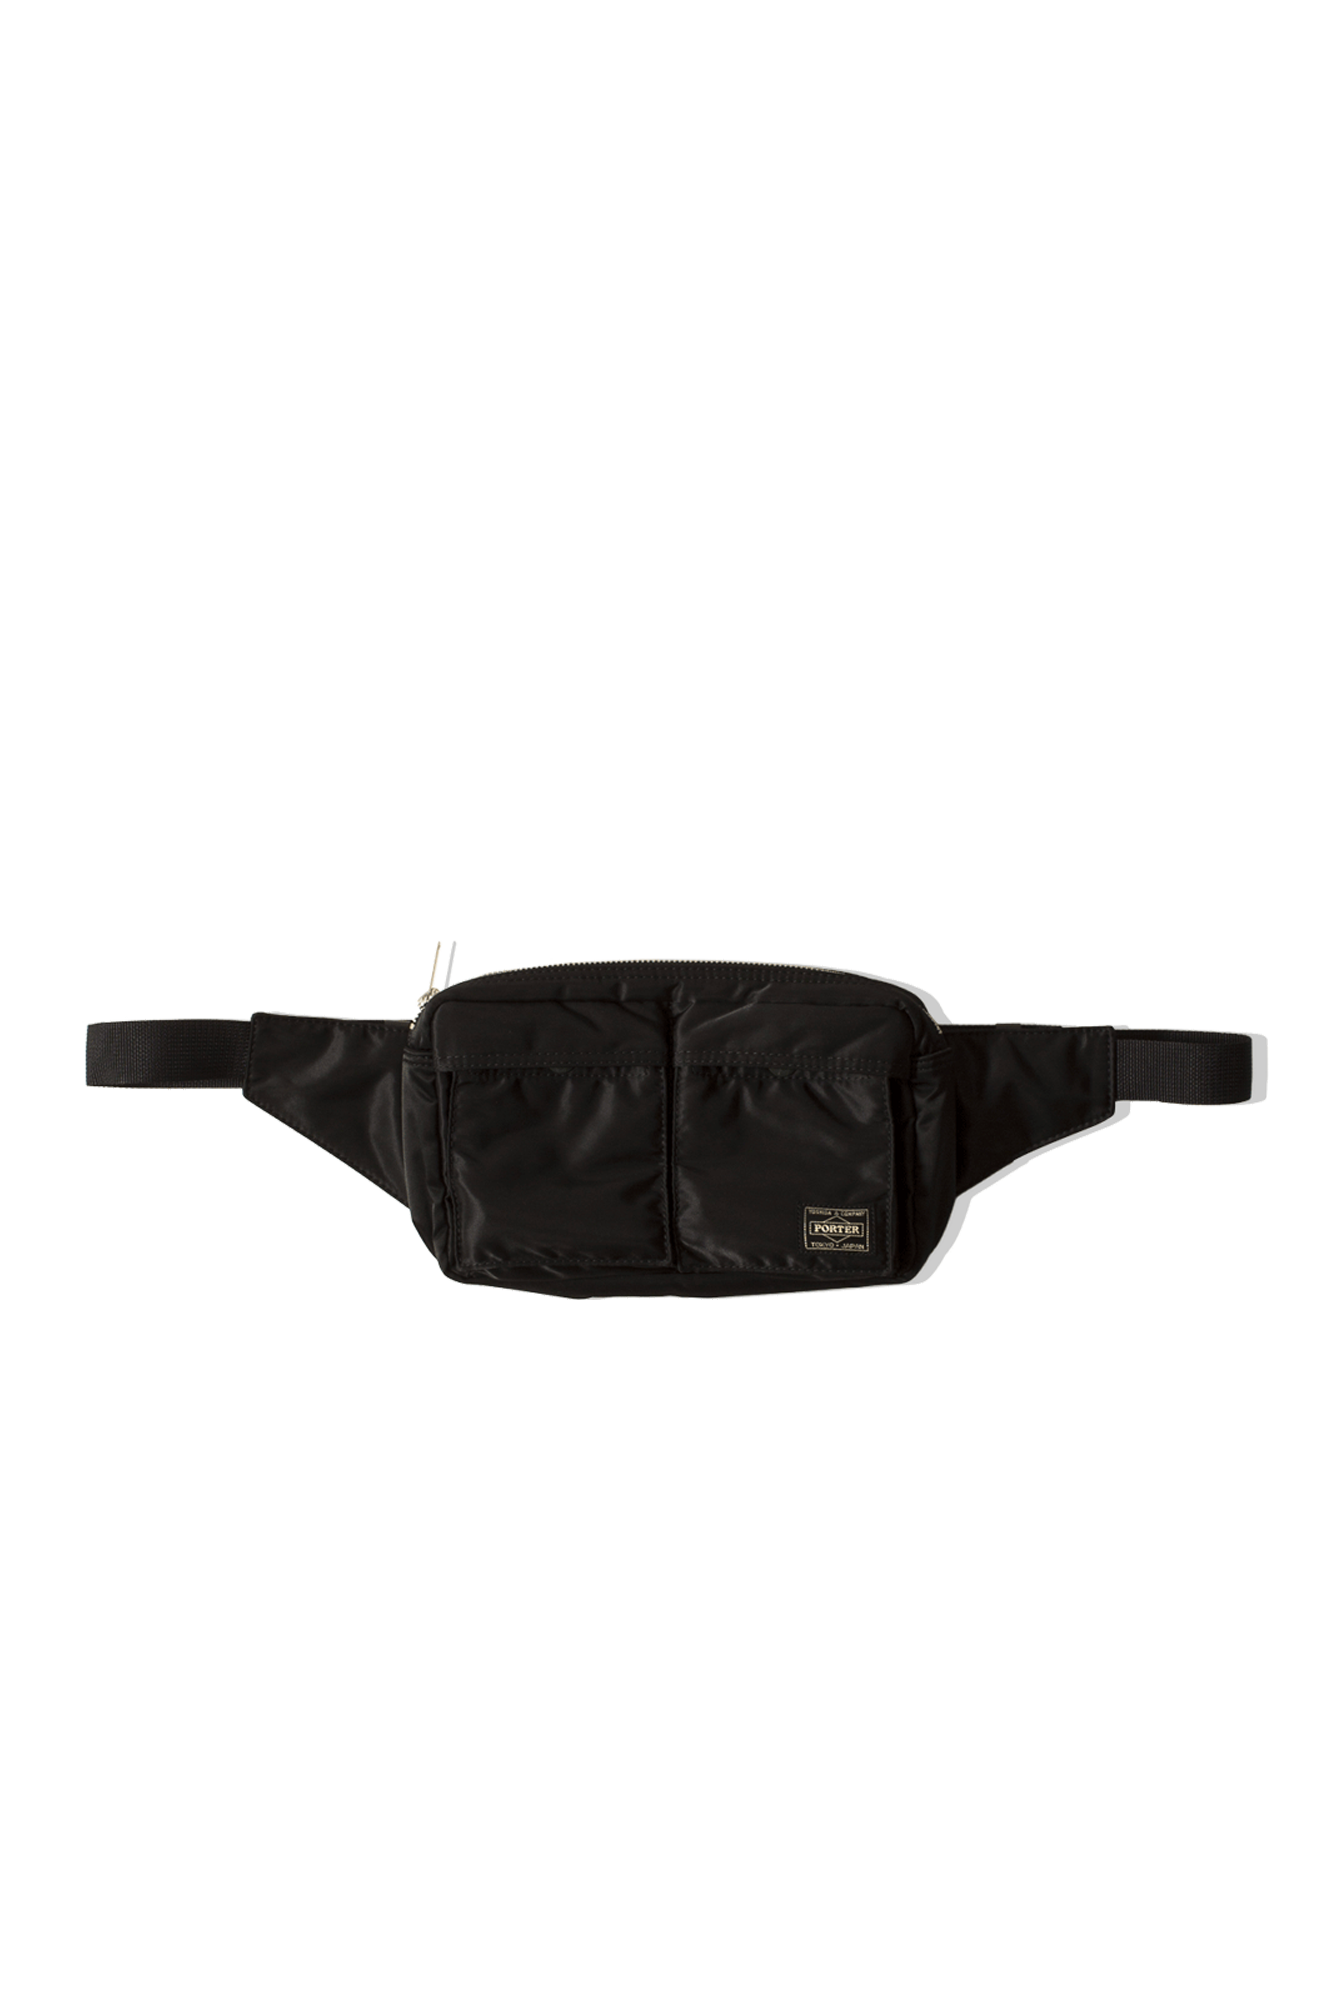 Porter-Yoshida & Co Belt Bags Tanker Waist Bag Black 68723#622#10#OS - One Block Down